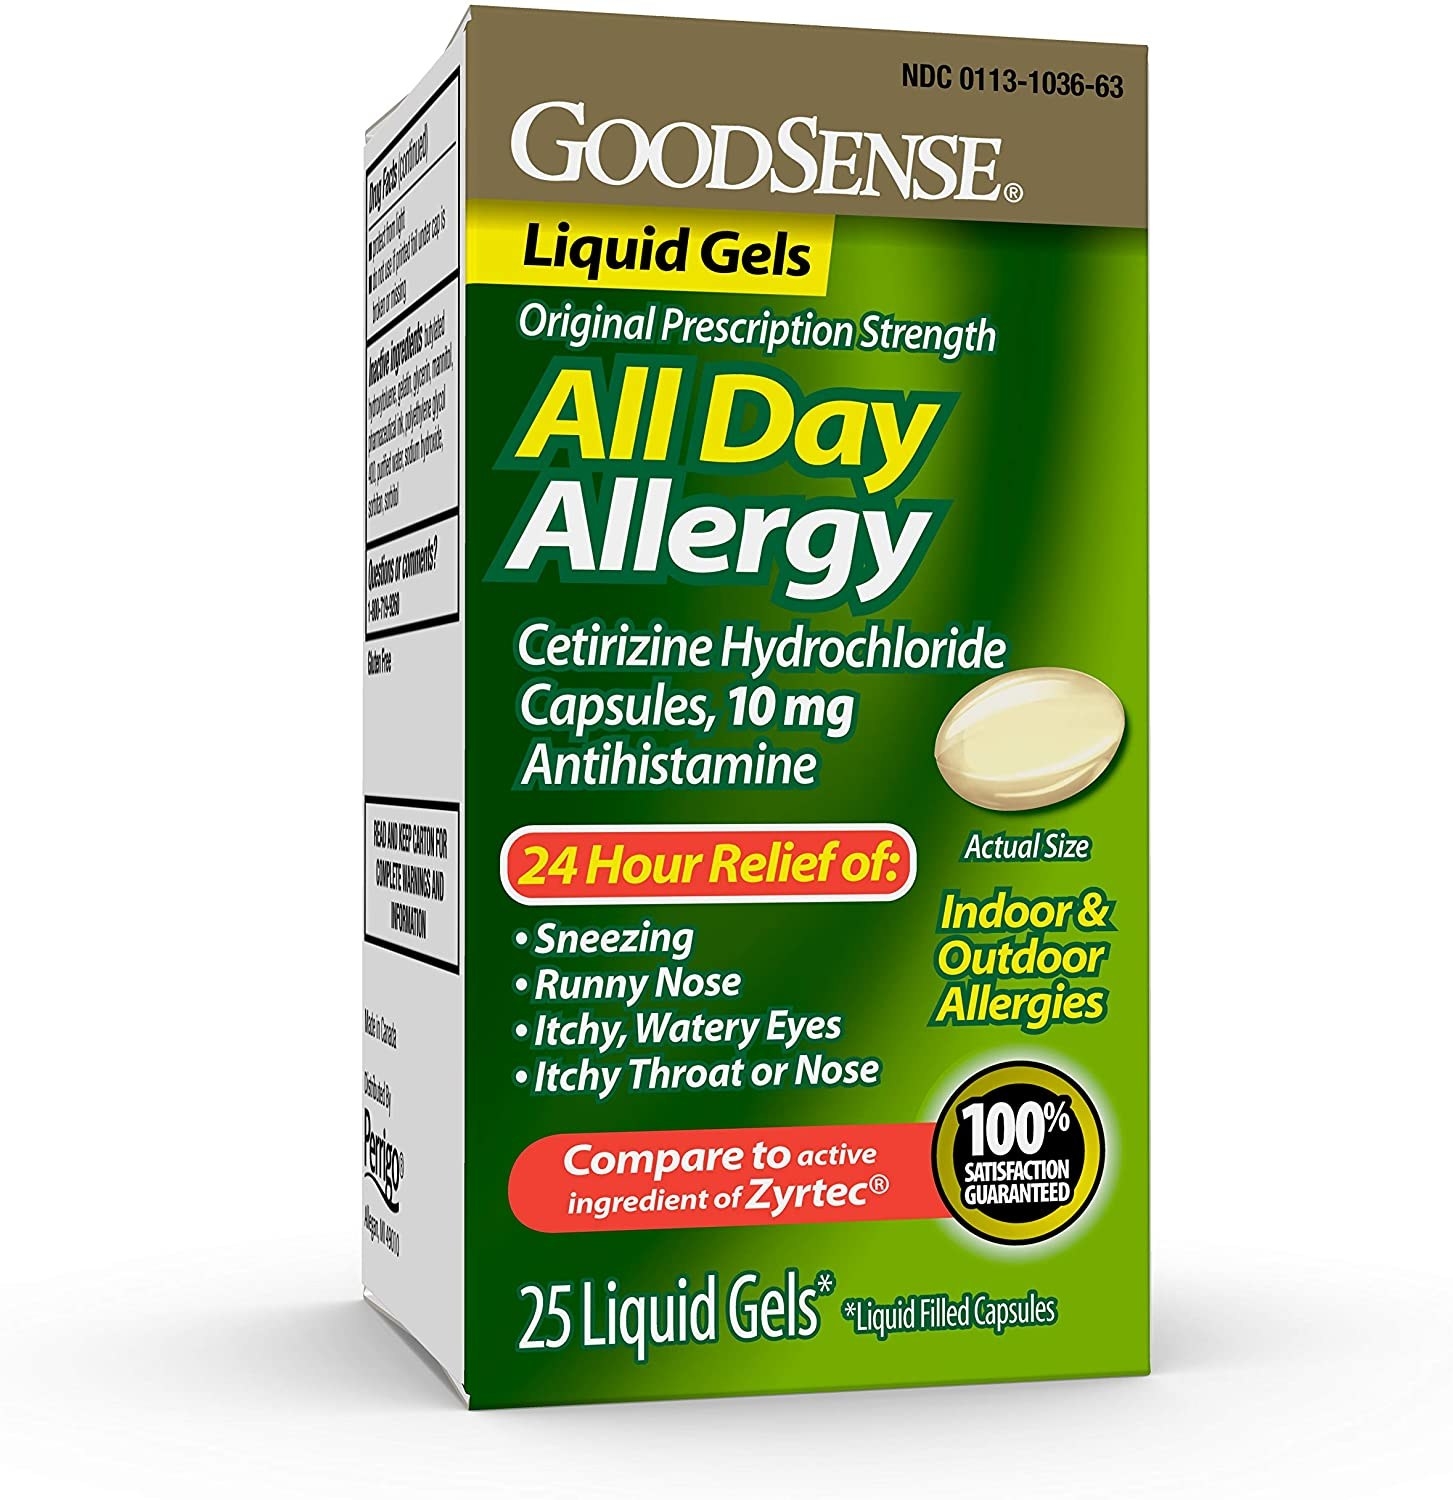 The package of allergy fighting liquid gels